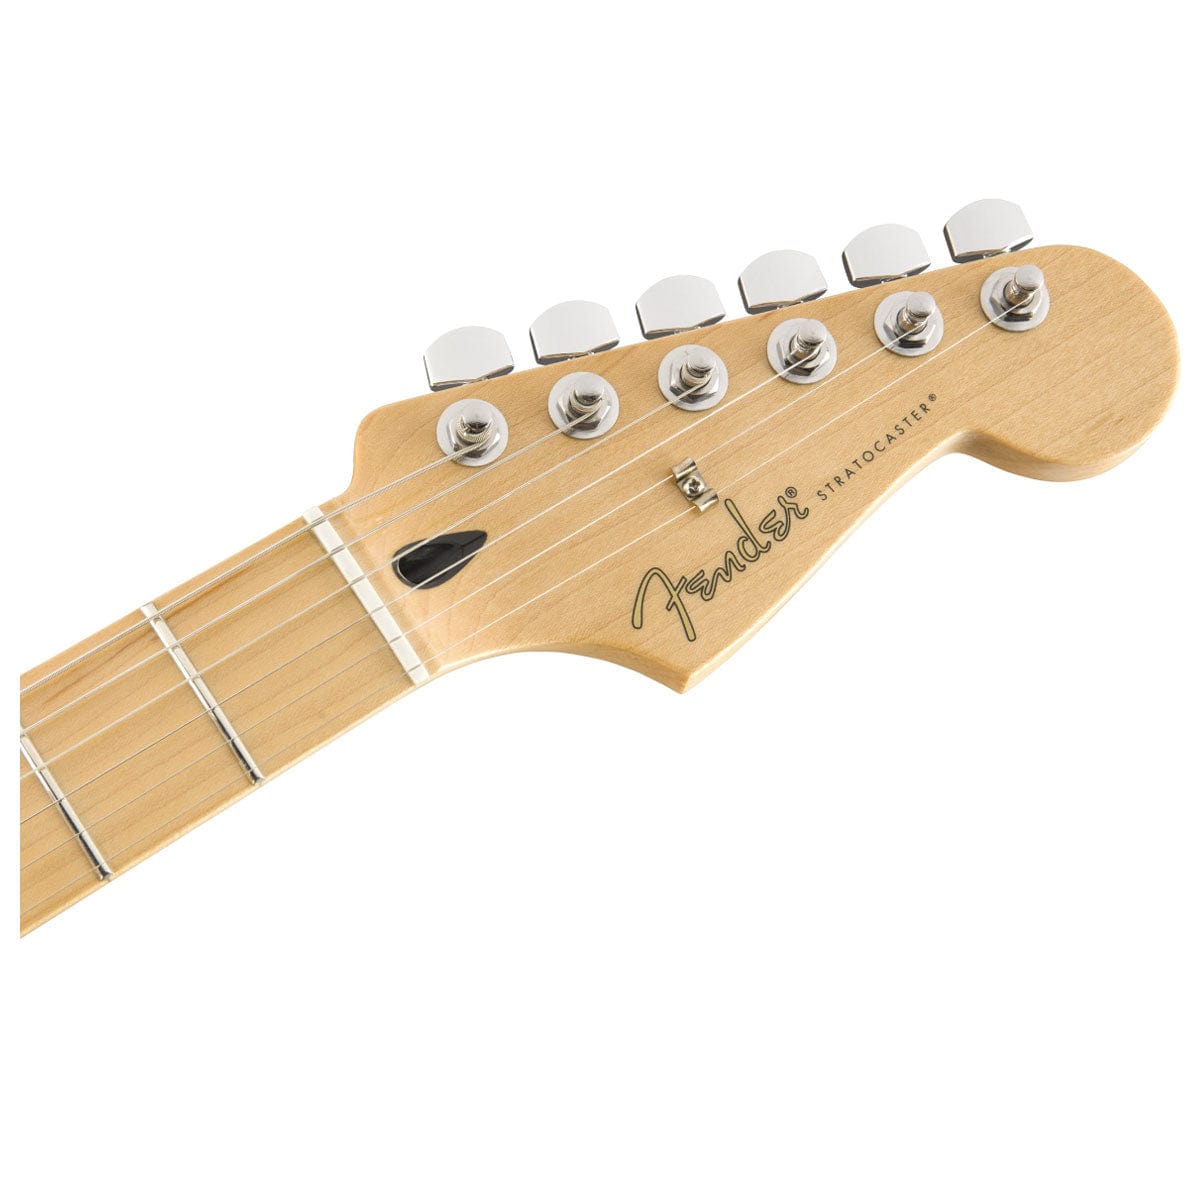 Fender Guitar Fender Player Stratocaster Electric Guitar (Buttercream) - Byron Music